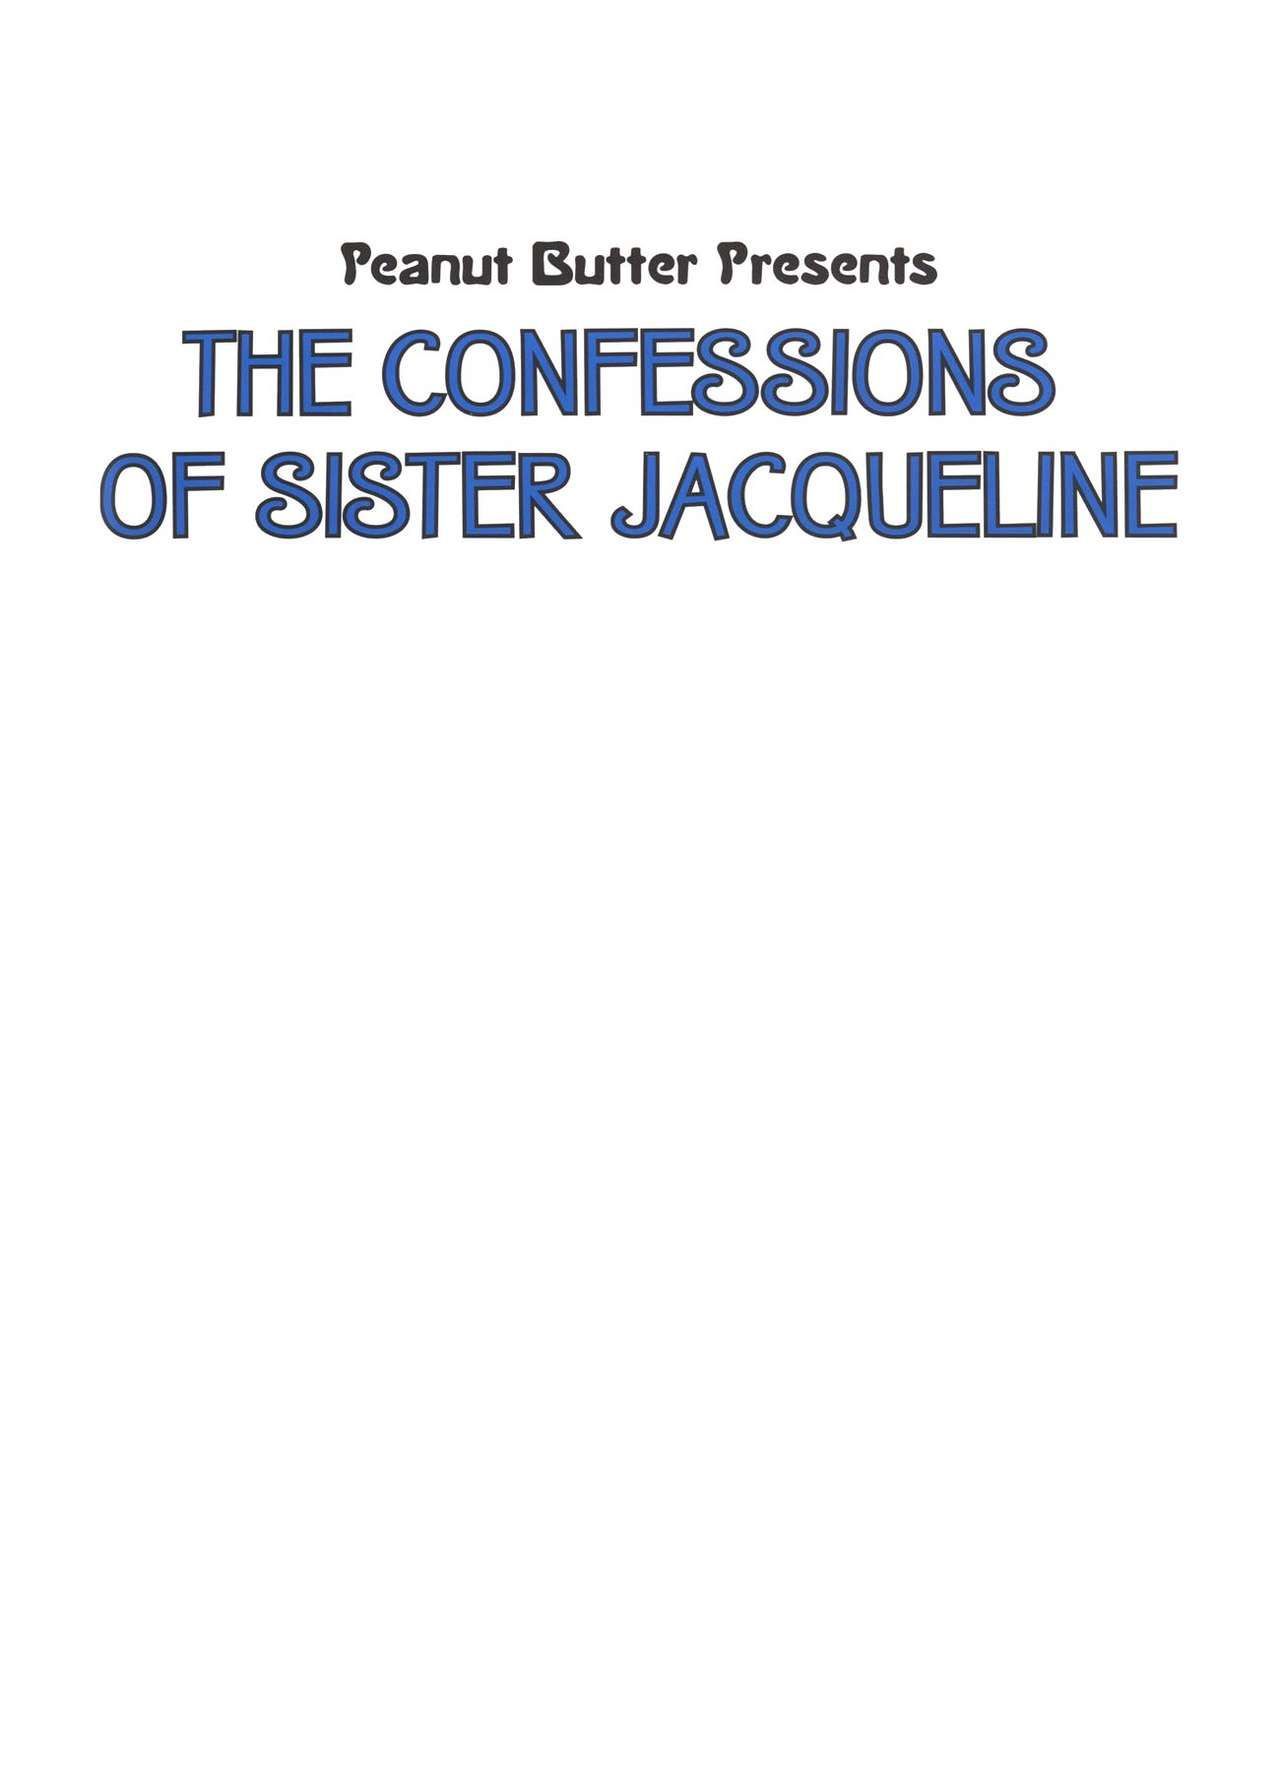 cornnell क्लार्क मूंगफली butter: के confessisons के बहन जैकलिन